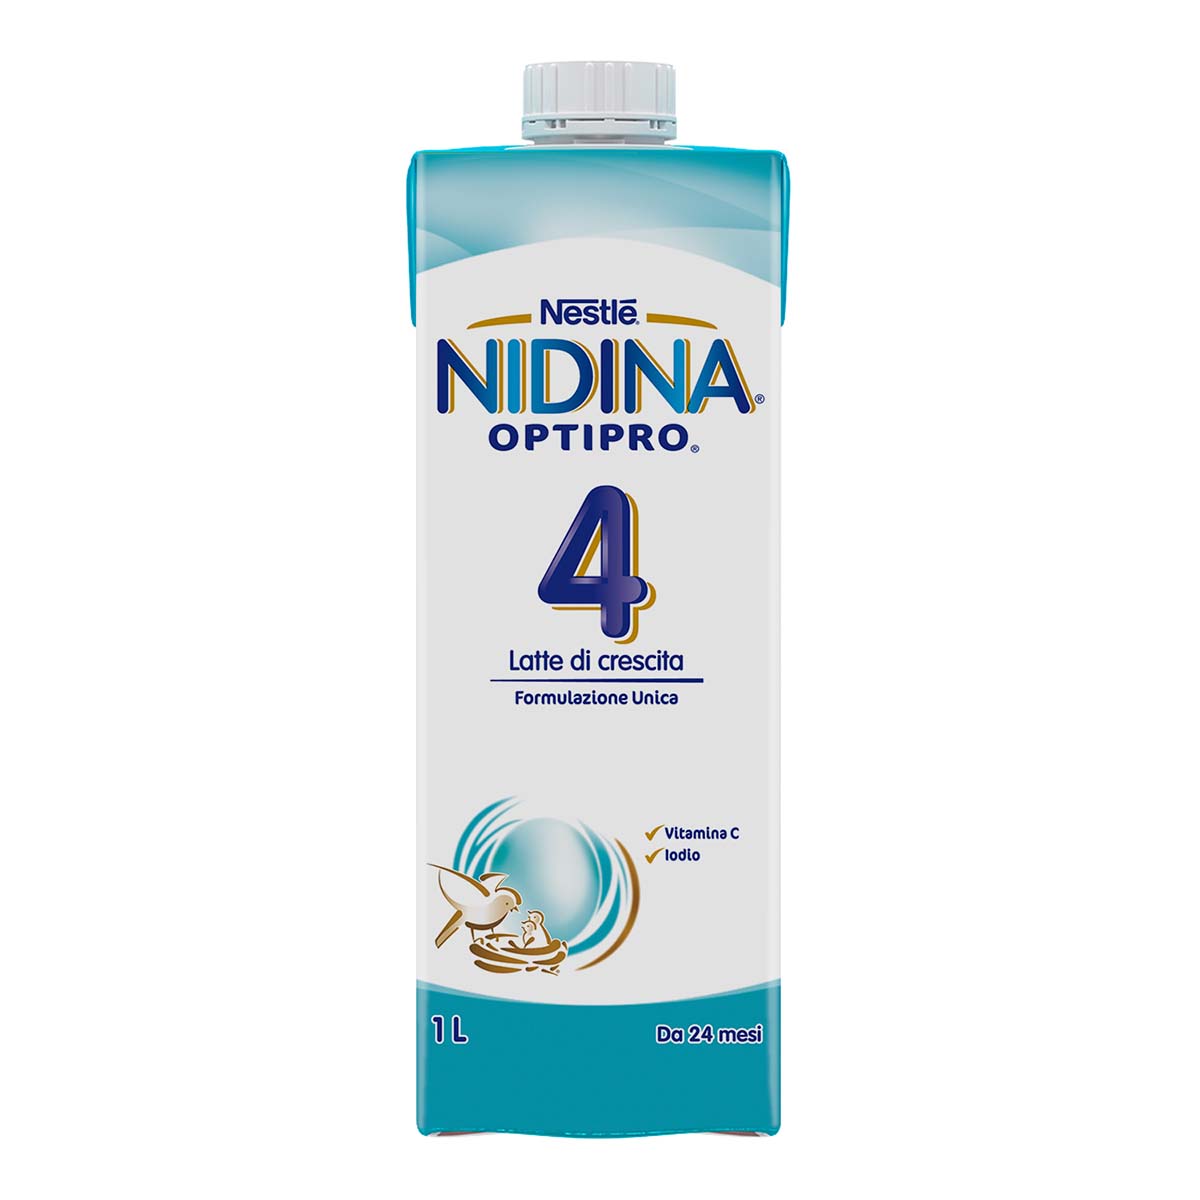 Nestlé NIDINA OPTIPRO 4 1L, Latte di crescita liquido, dai 24 mesi